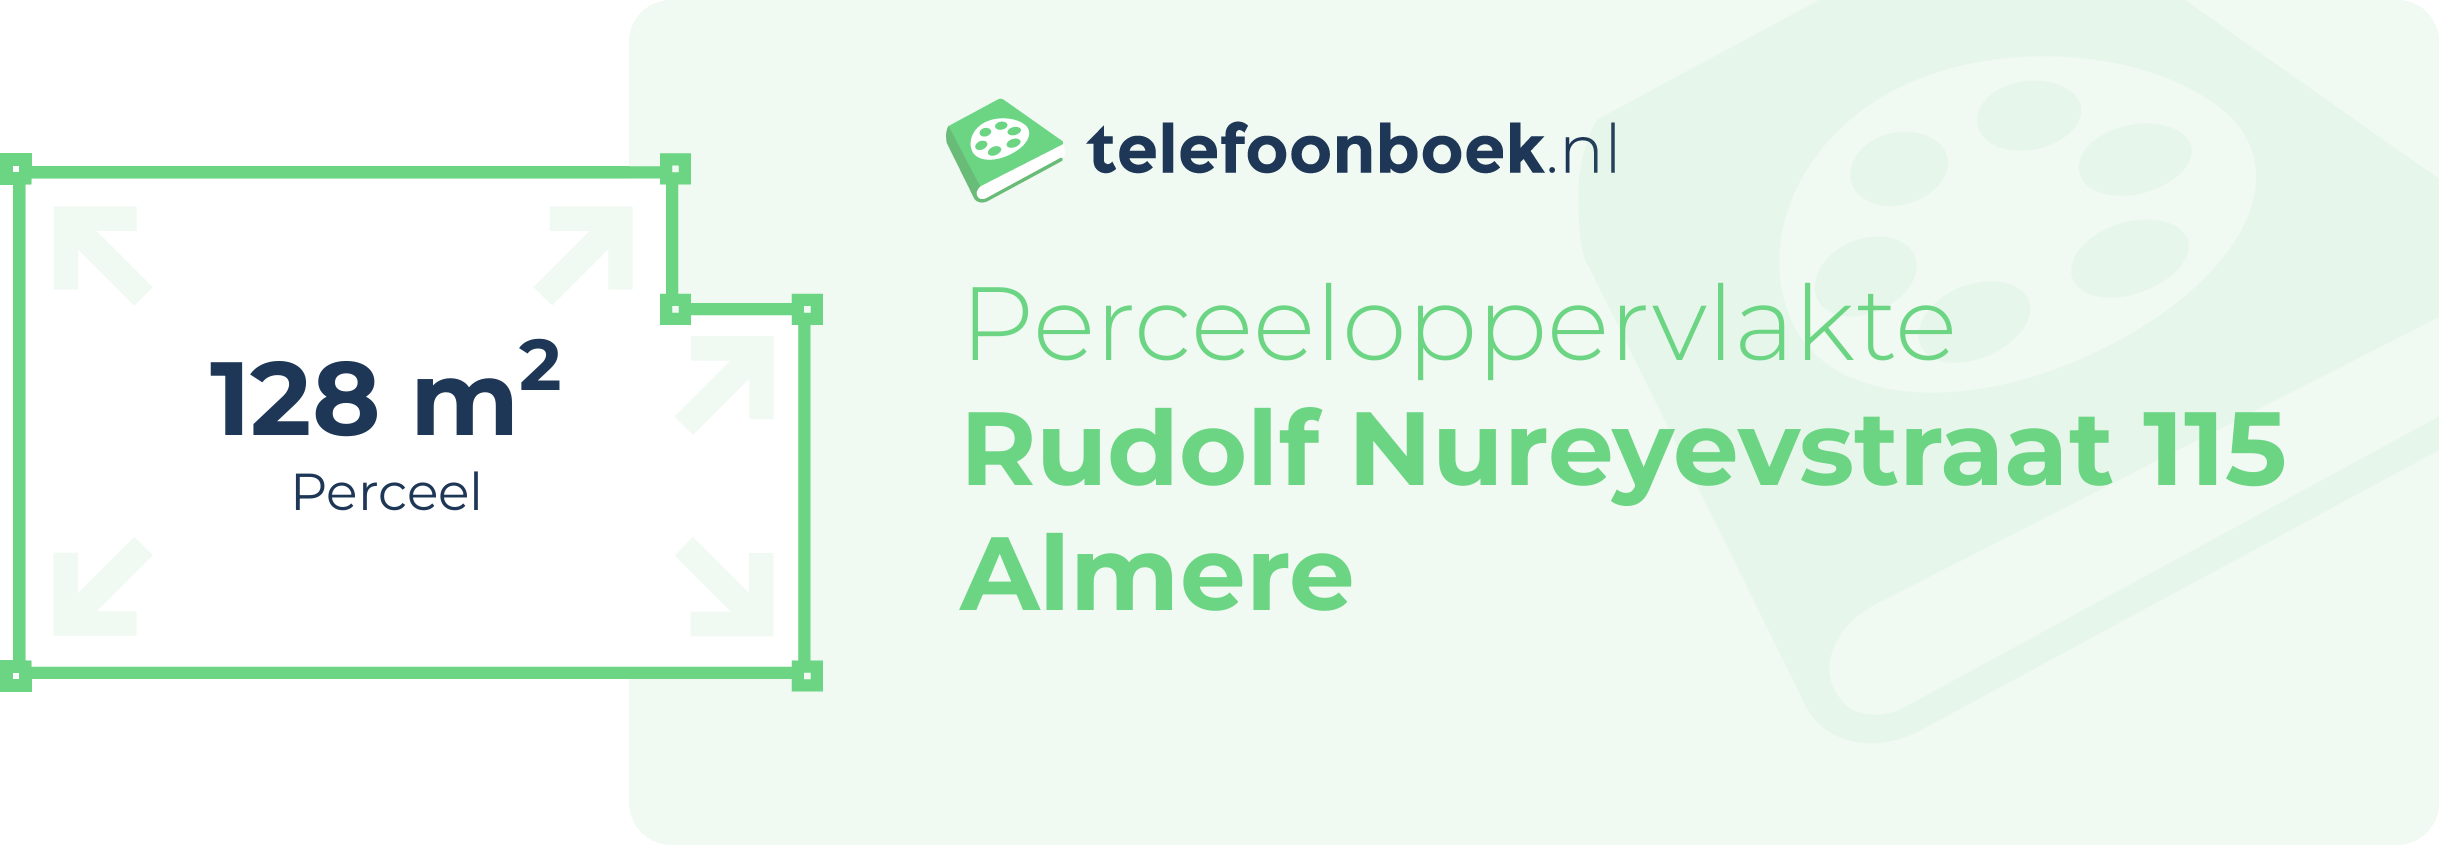 Perceeloppervlakte Rudolf Nureyevstraat 115 Almere